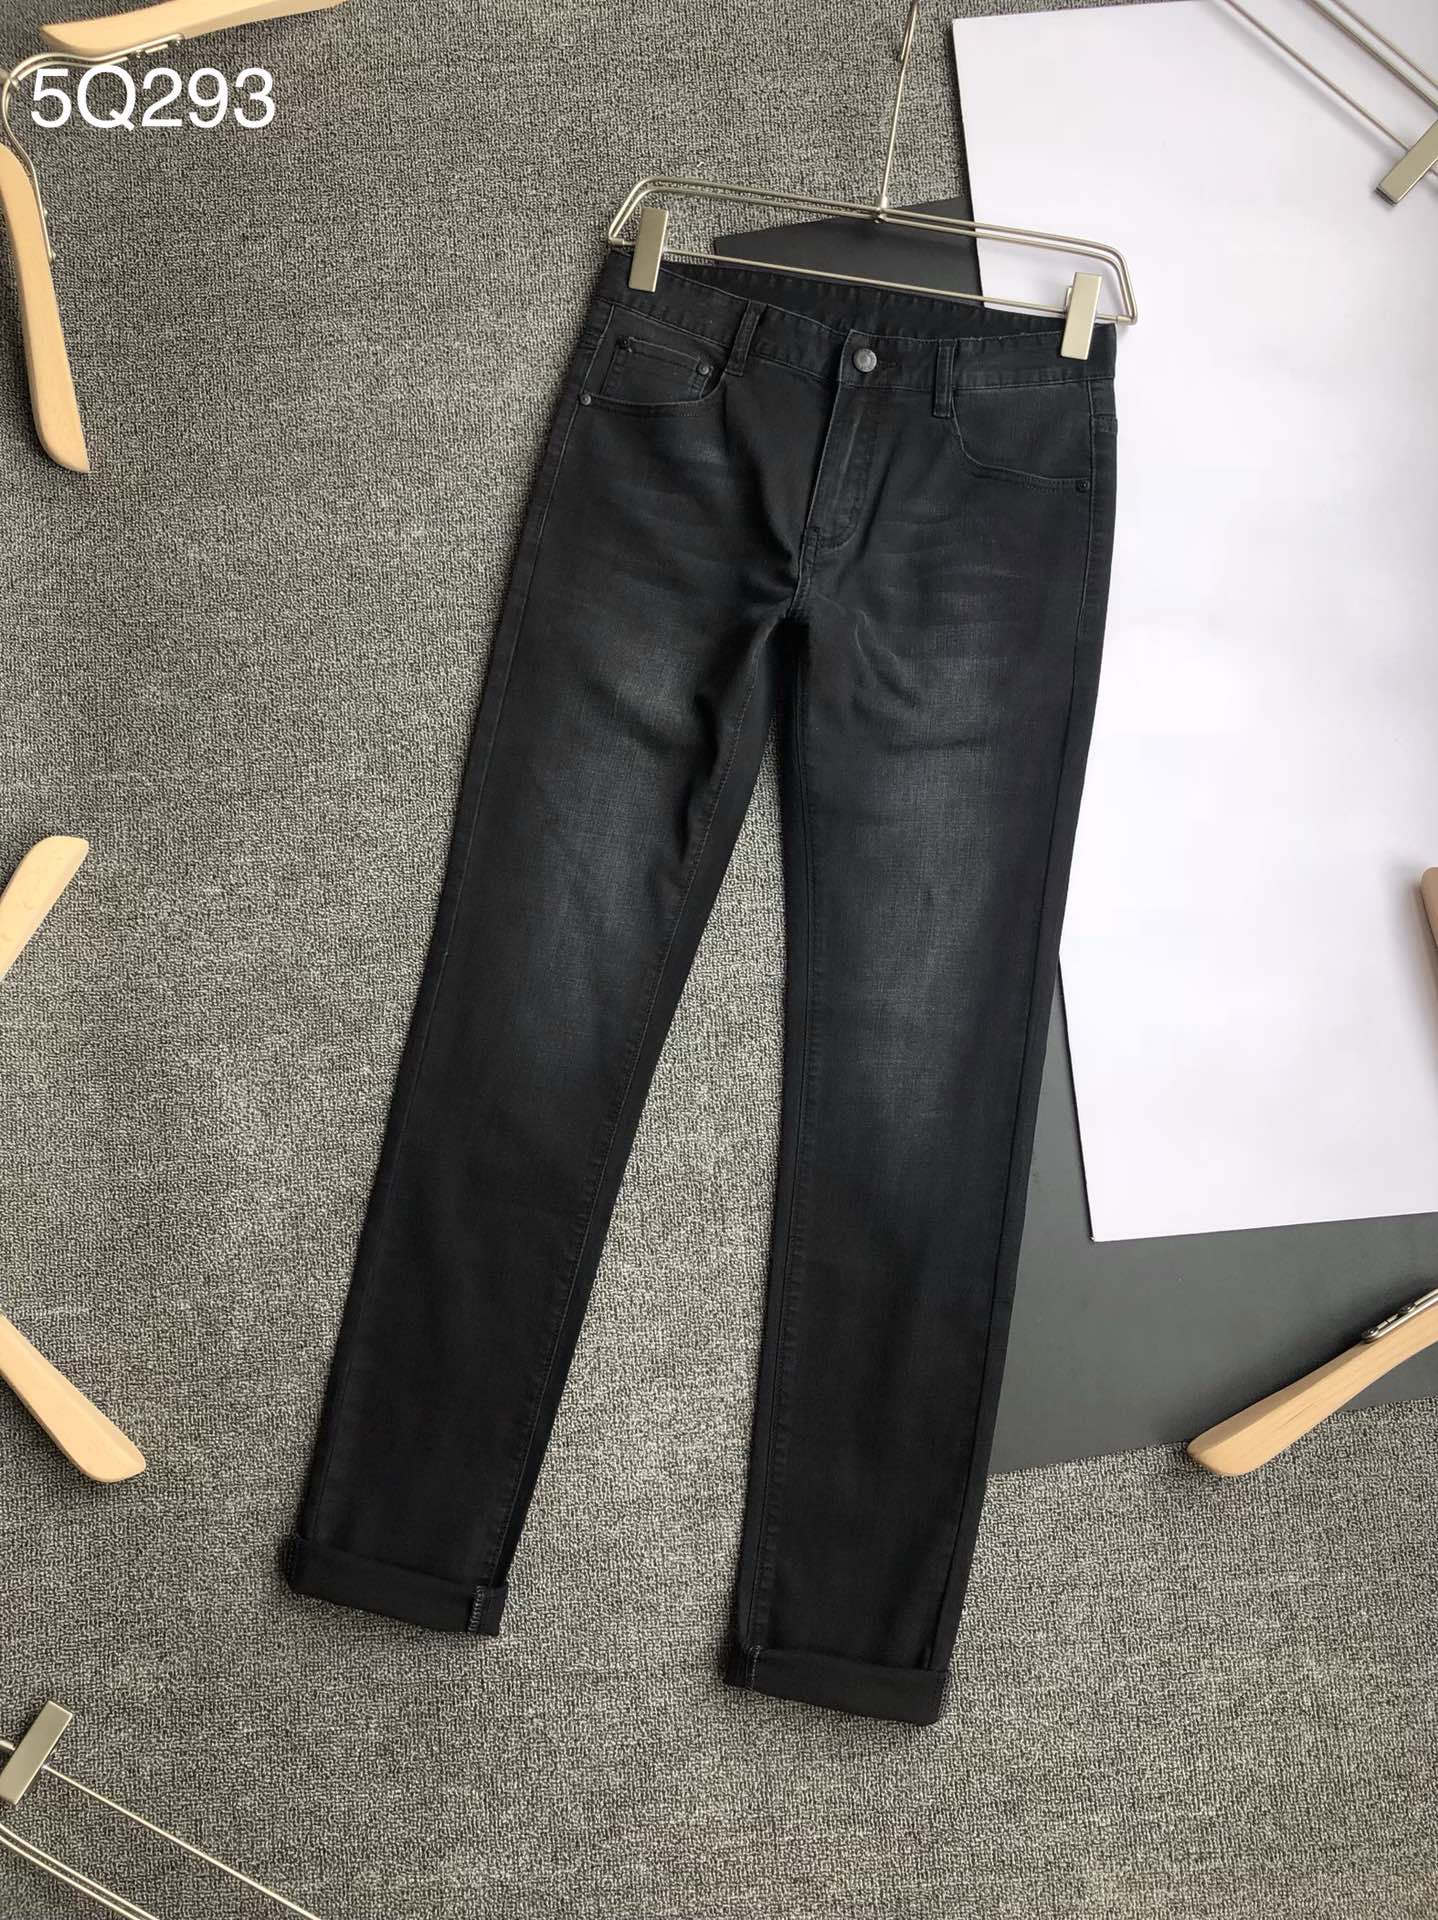 armani jeans trousers mens